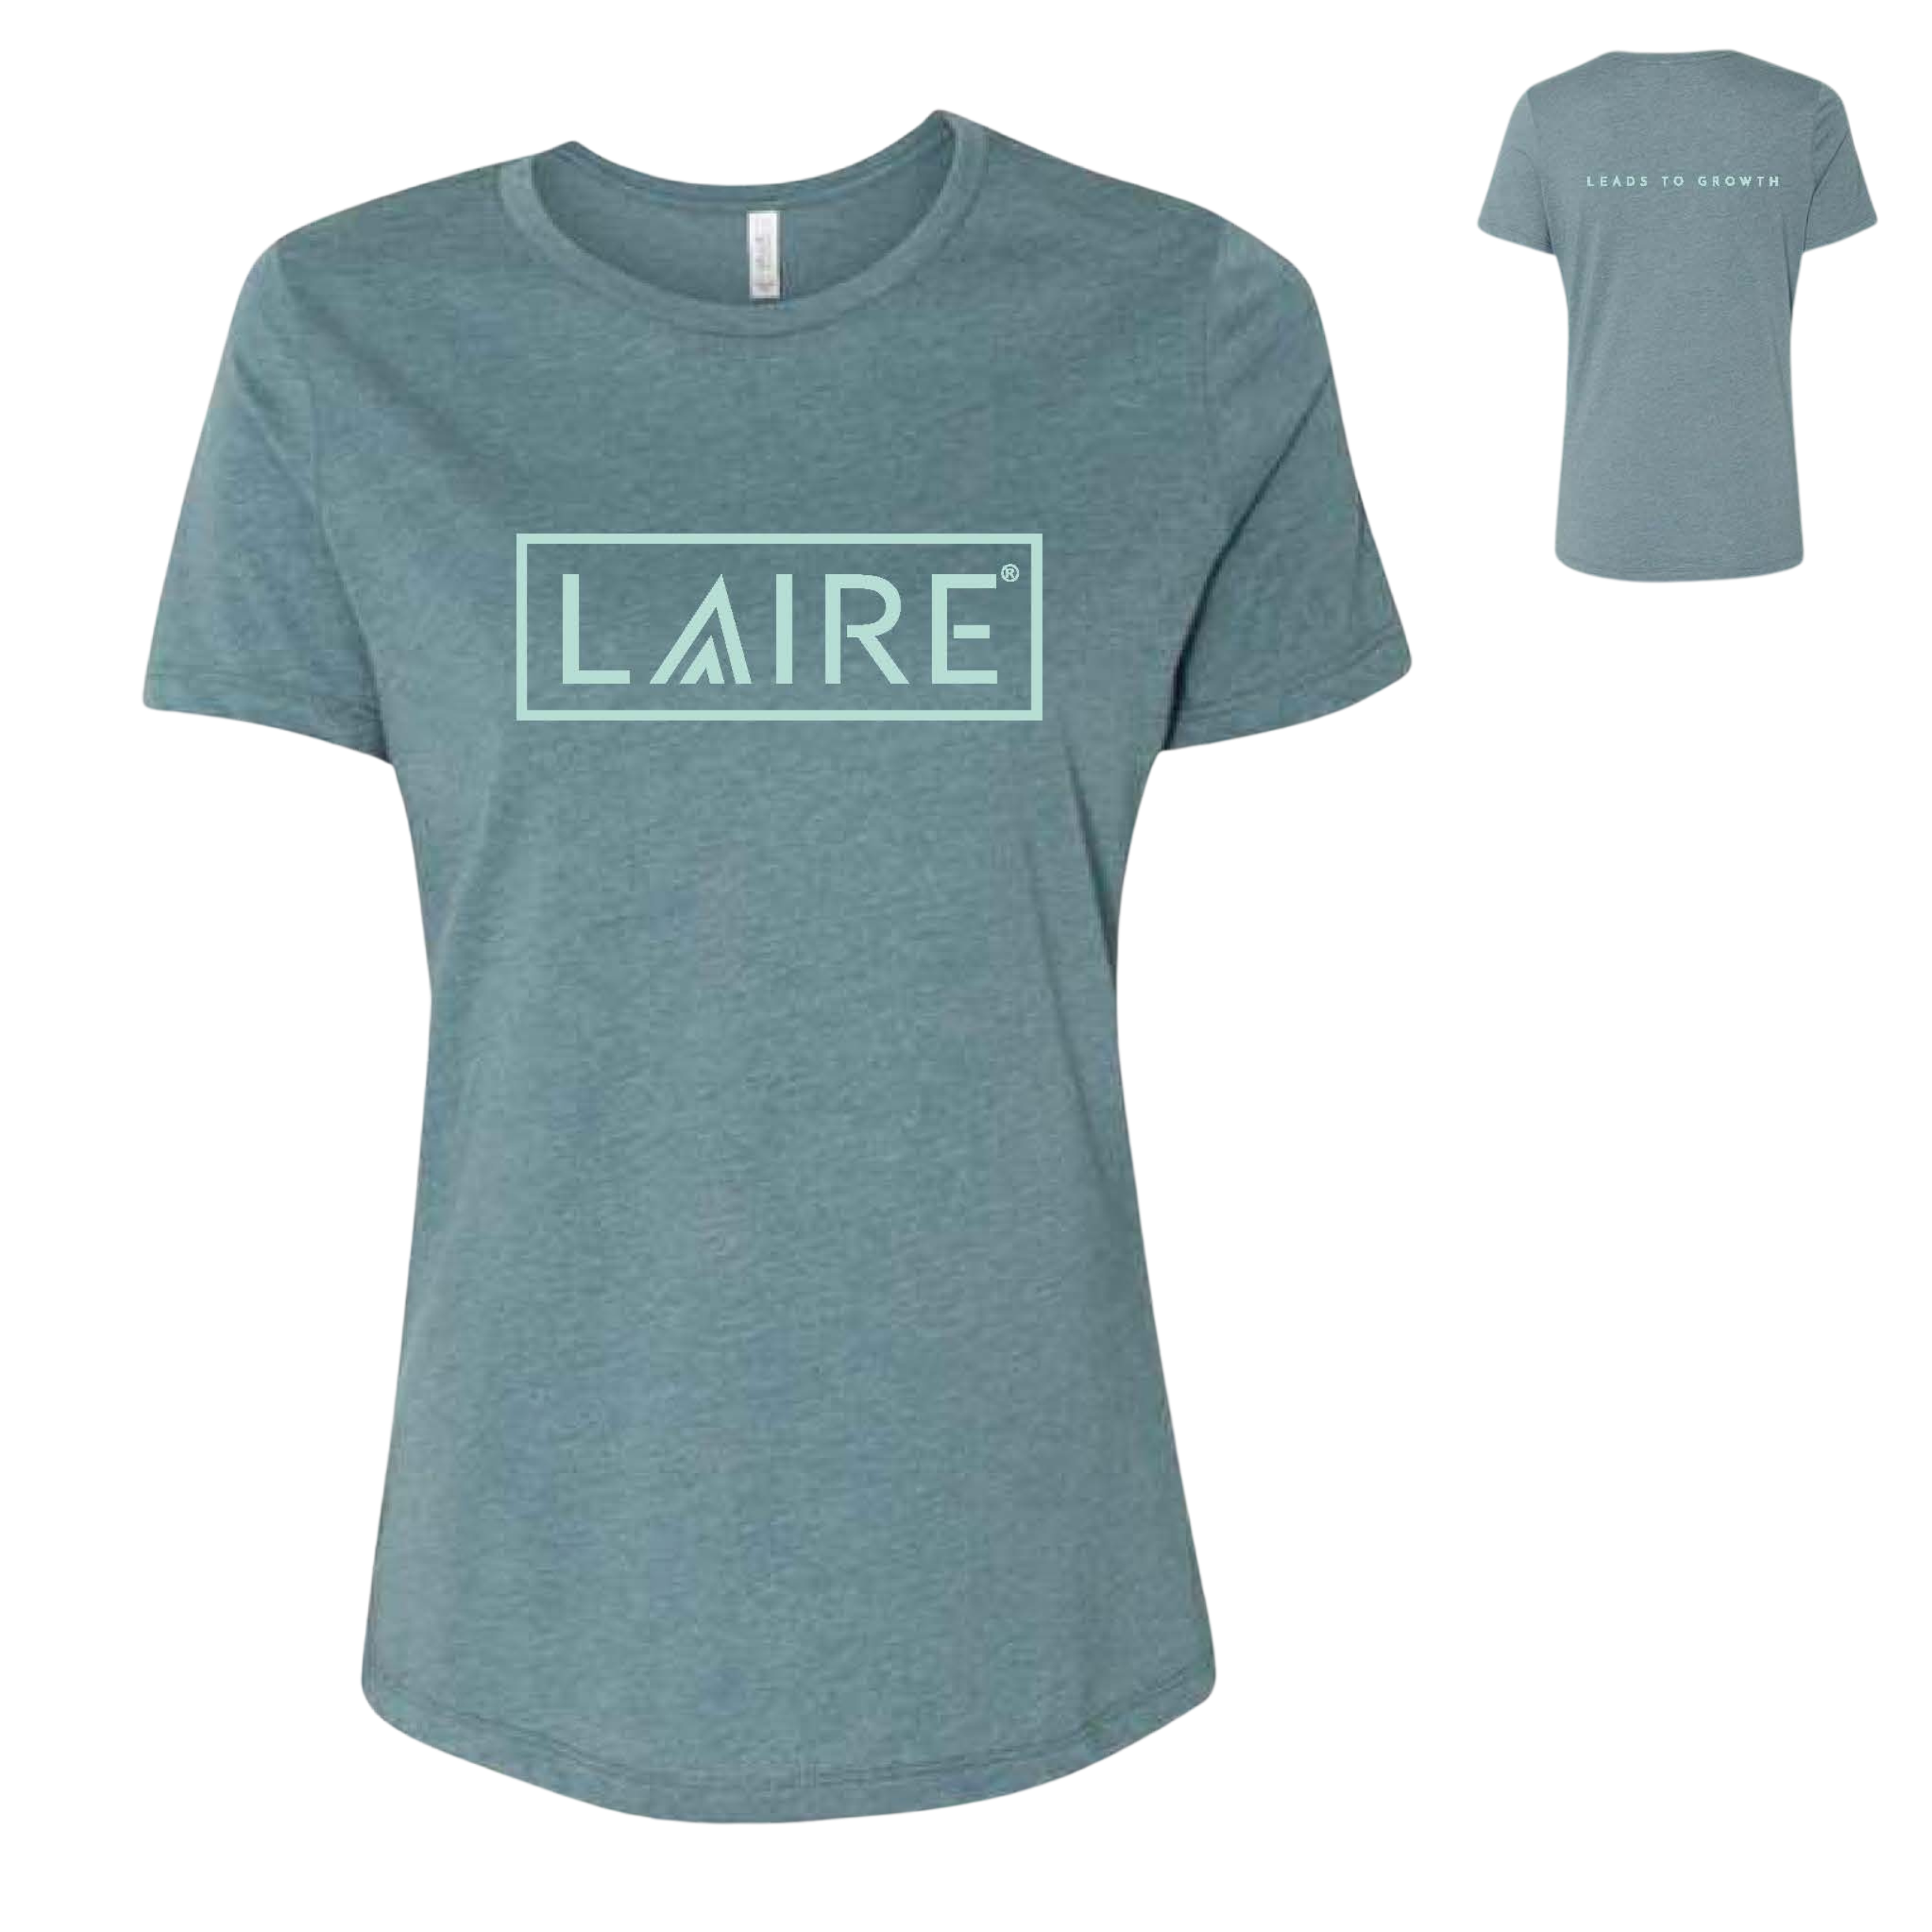 Super Soft Tri-Blend Women's Cut T-Shirt- Heather Slate